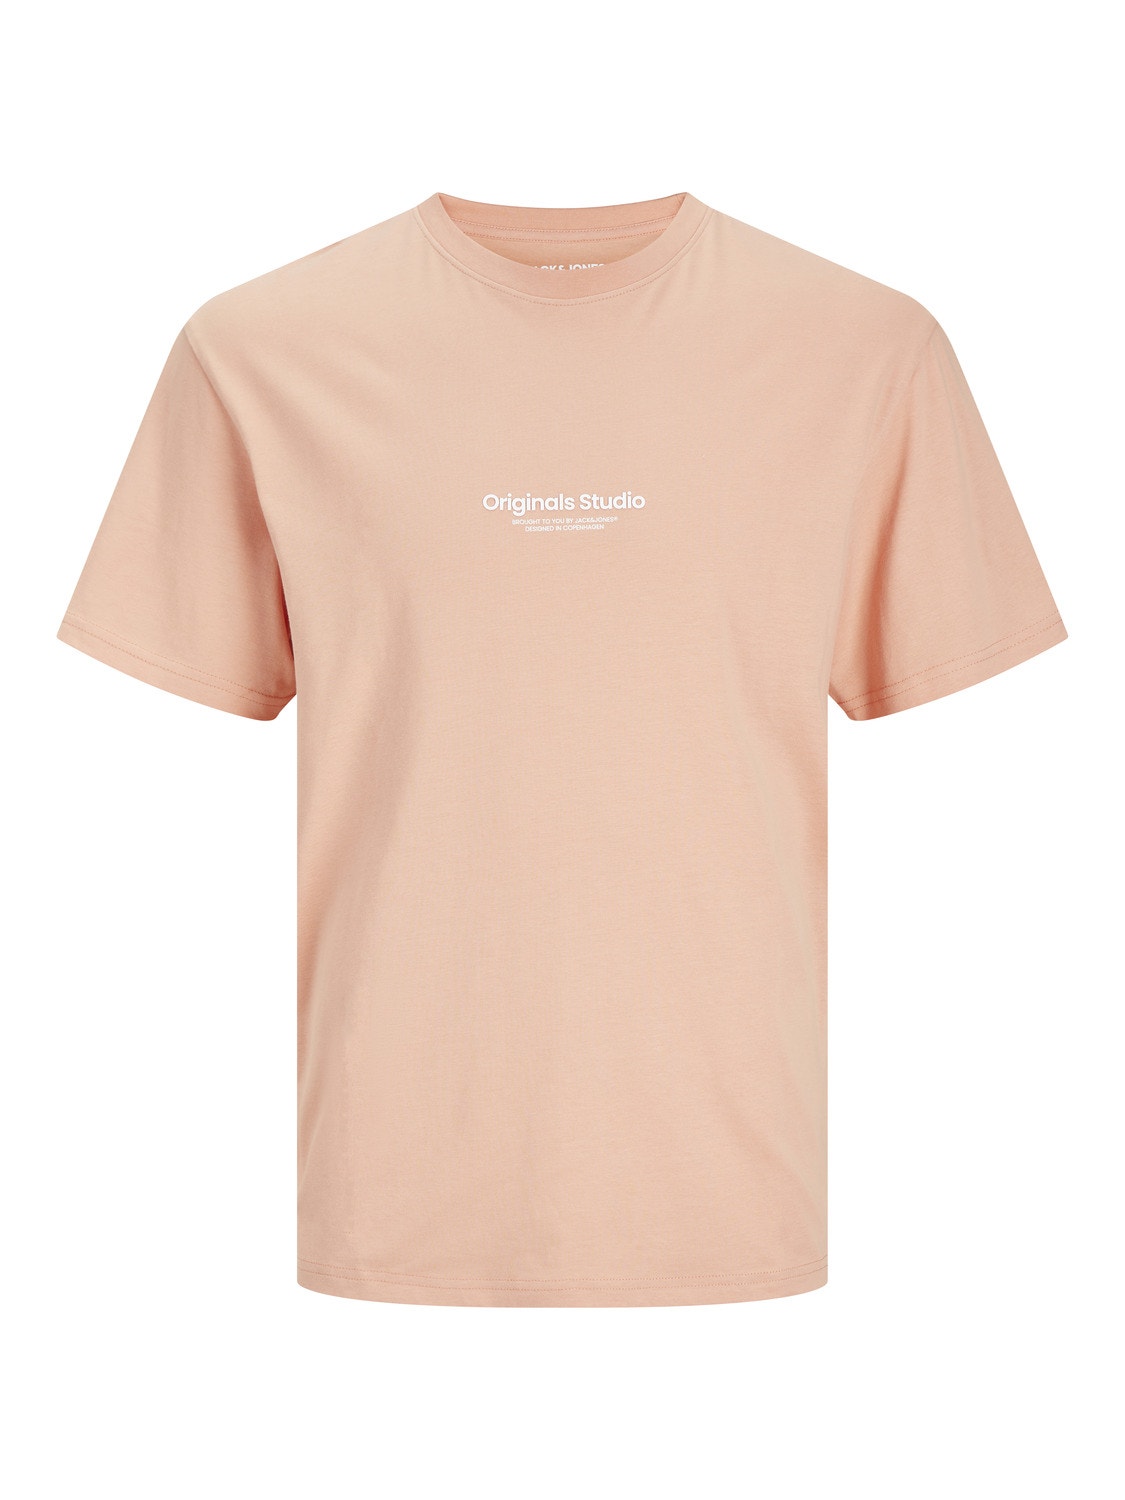 Jack & Jones T-shirt Estampar Decote Redondo -Canyon Sunset - 12240121